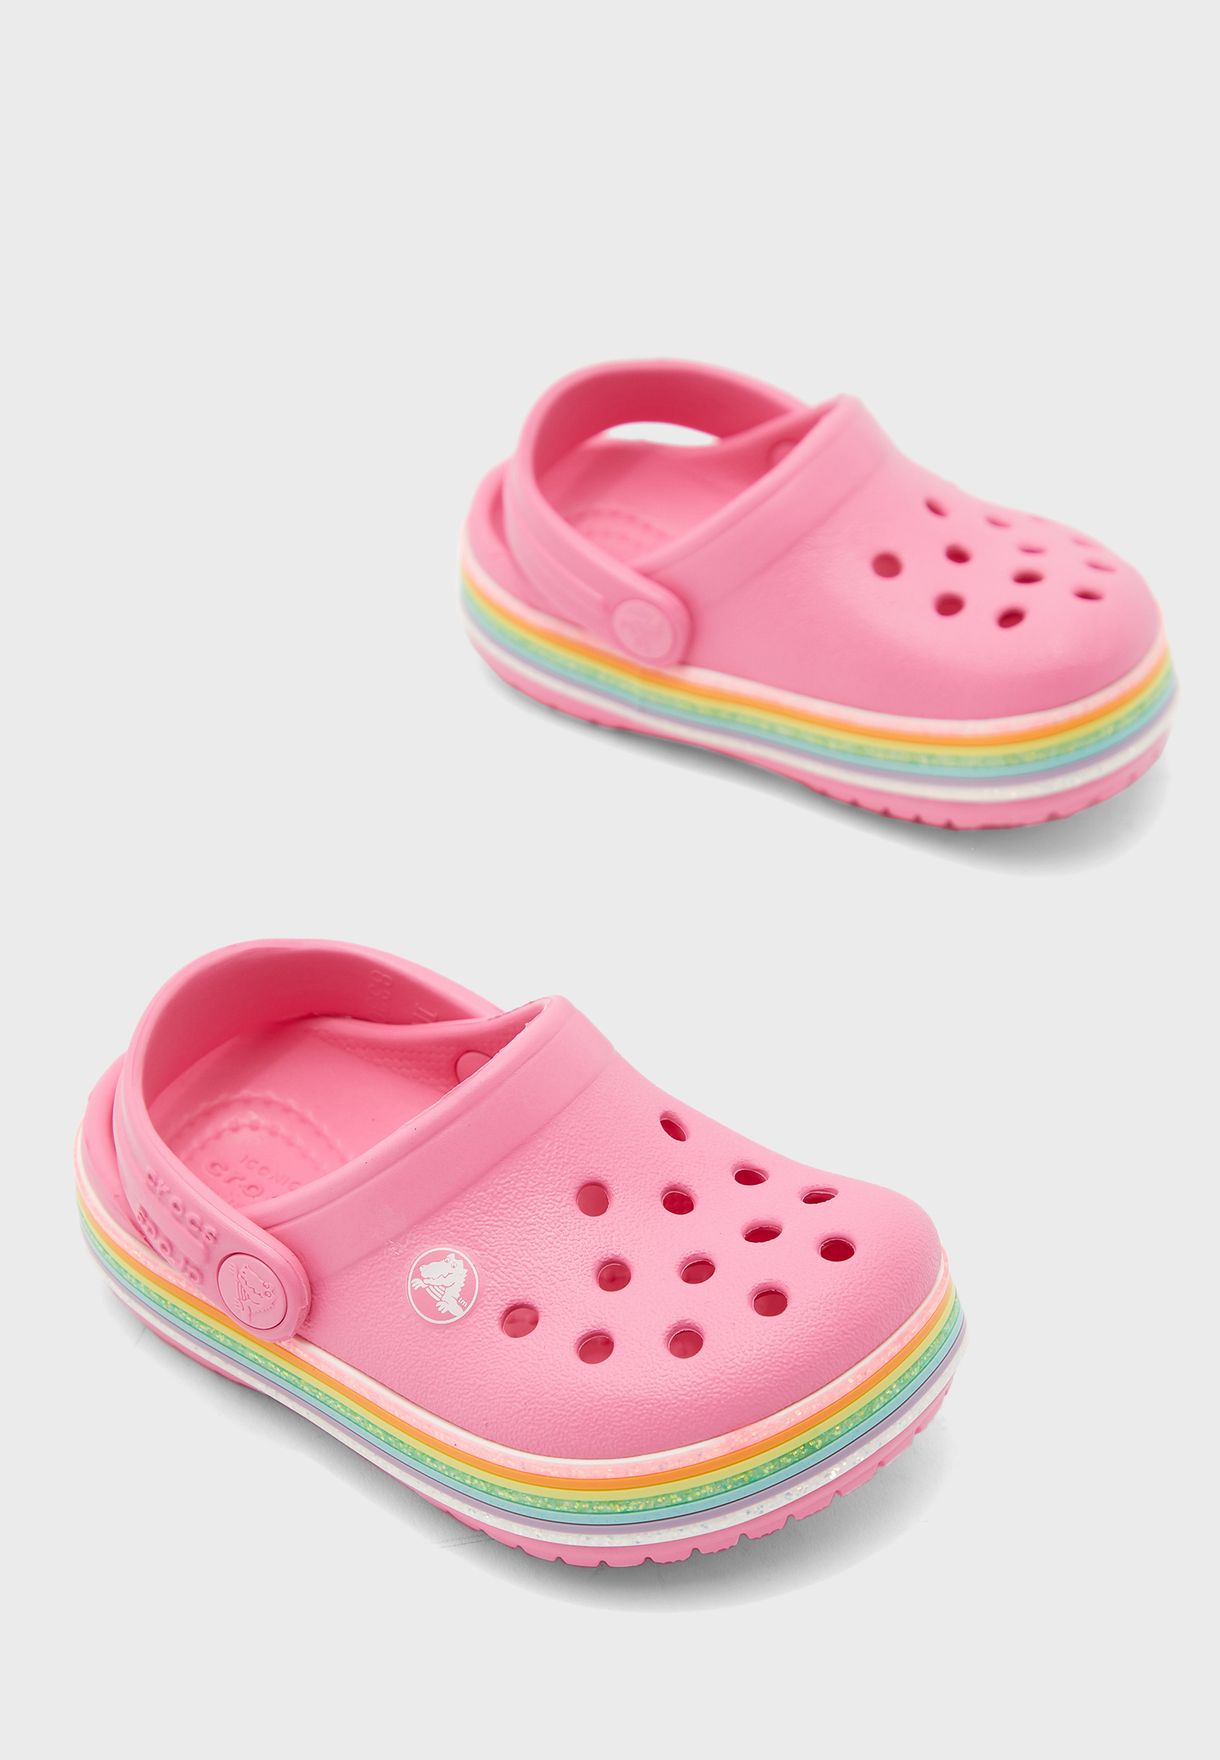 pink glitter crocs